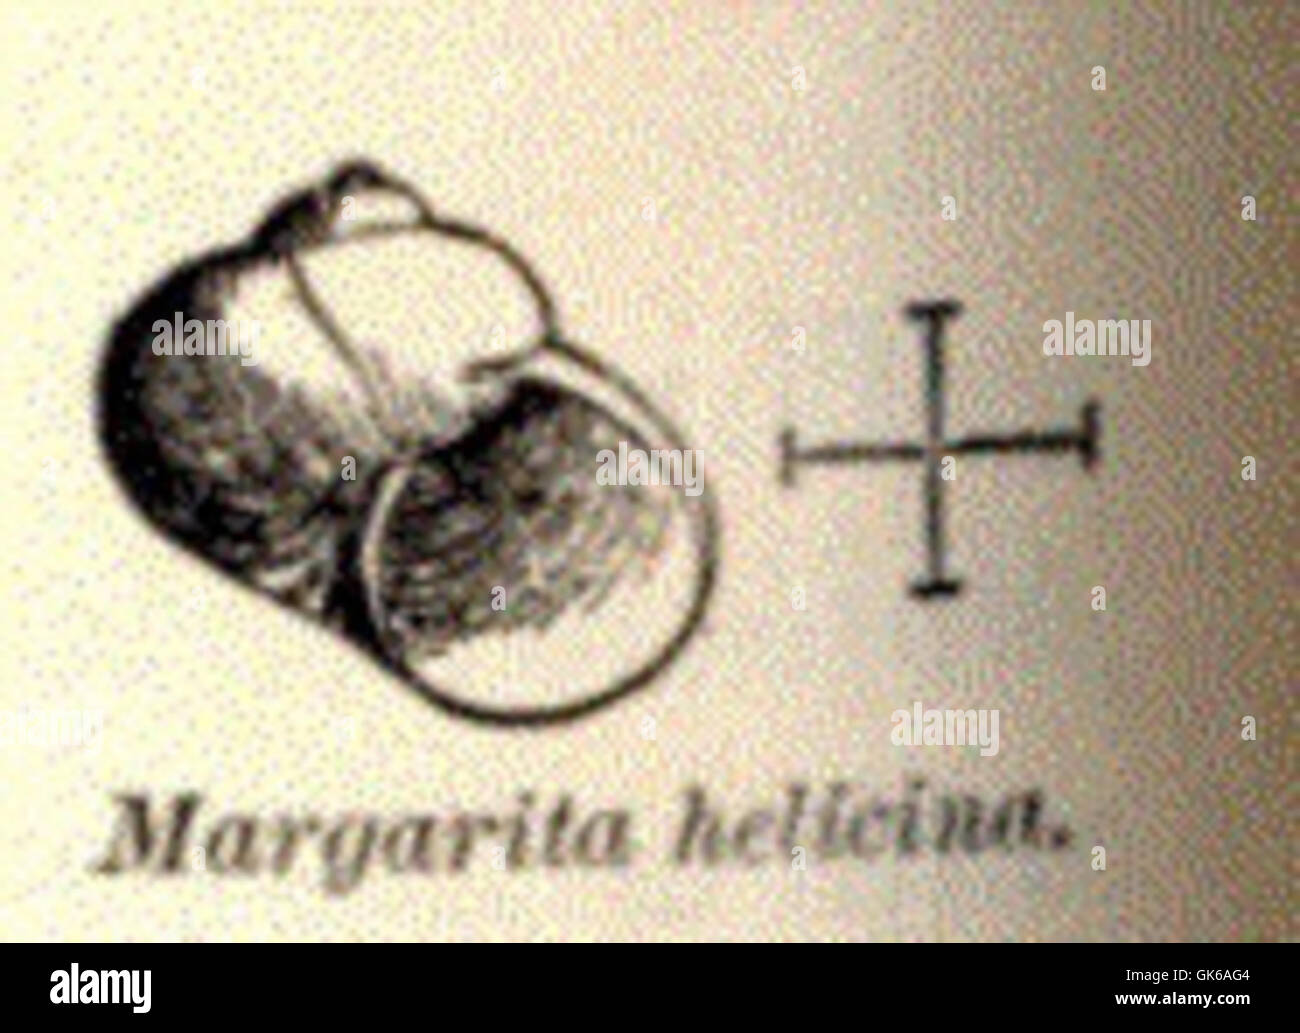 52772 Margarita helicina Stock Photo